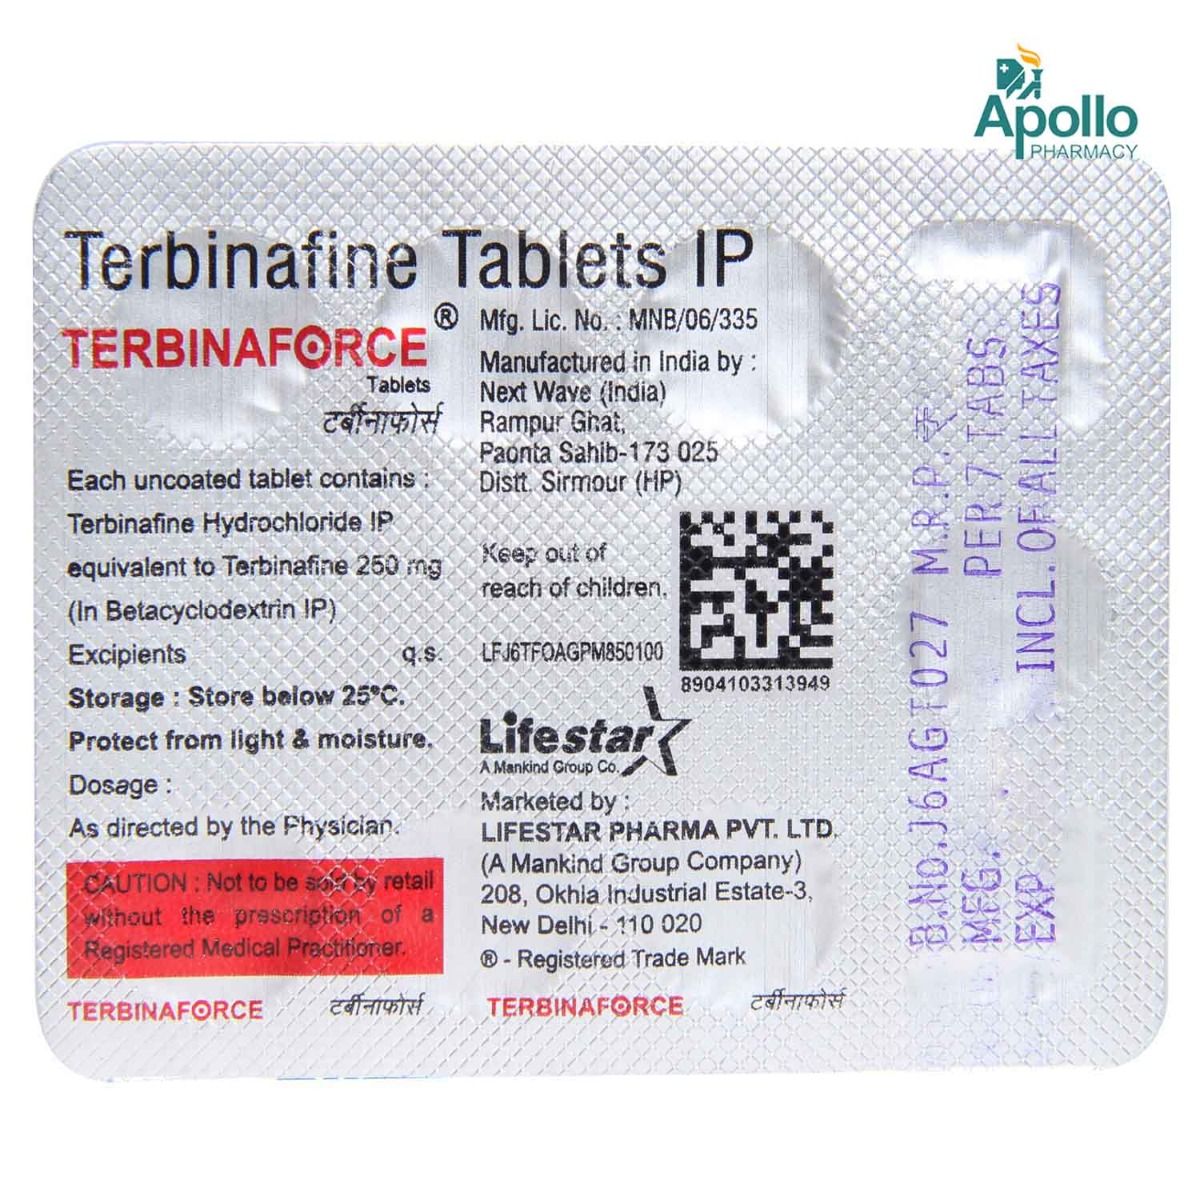 Terbinaforce Tablet 7's, Pack of 7 TABLETS